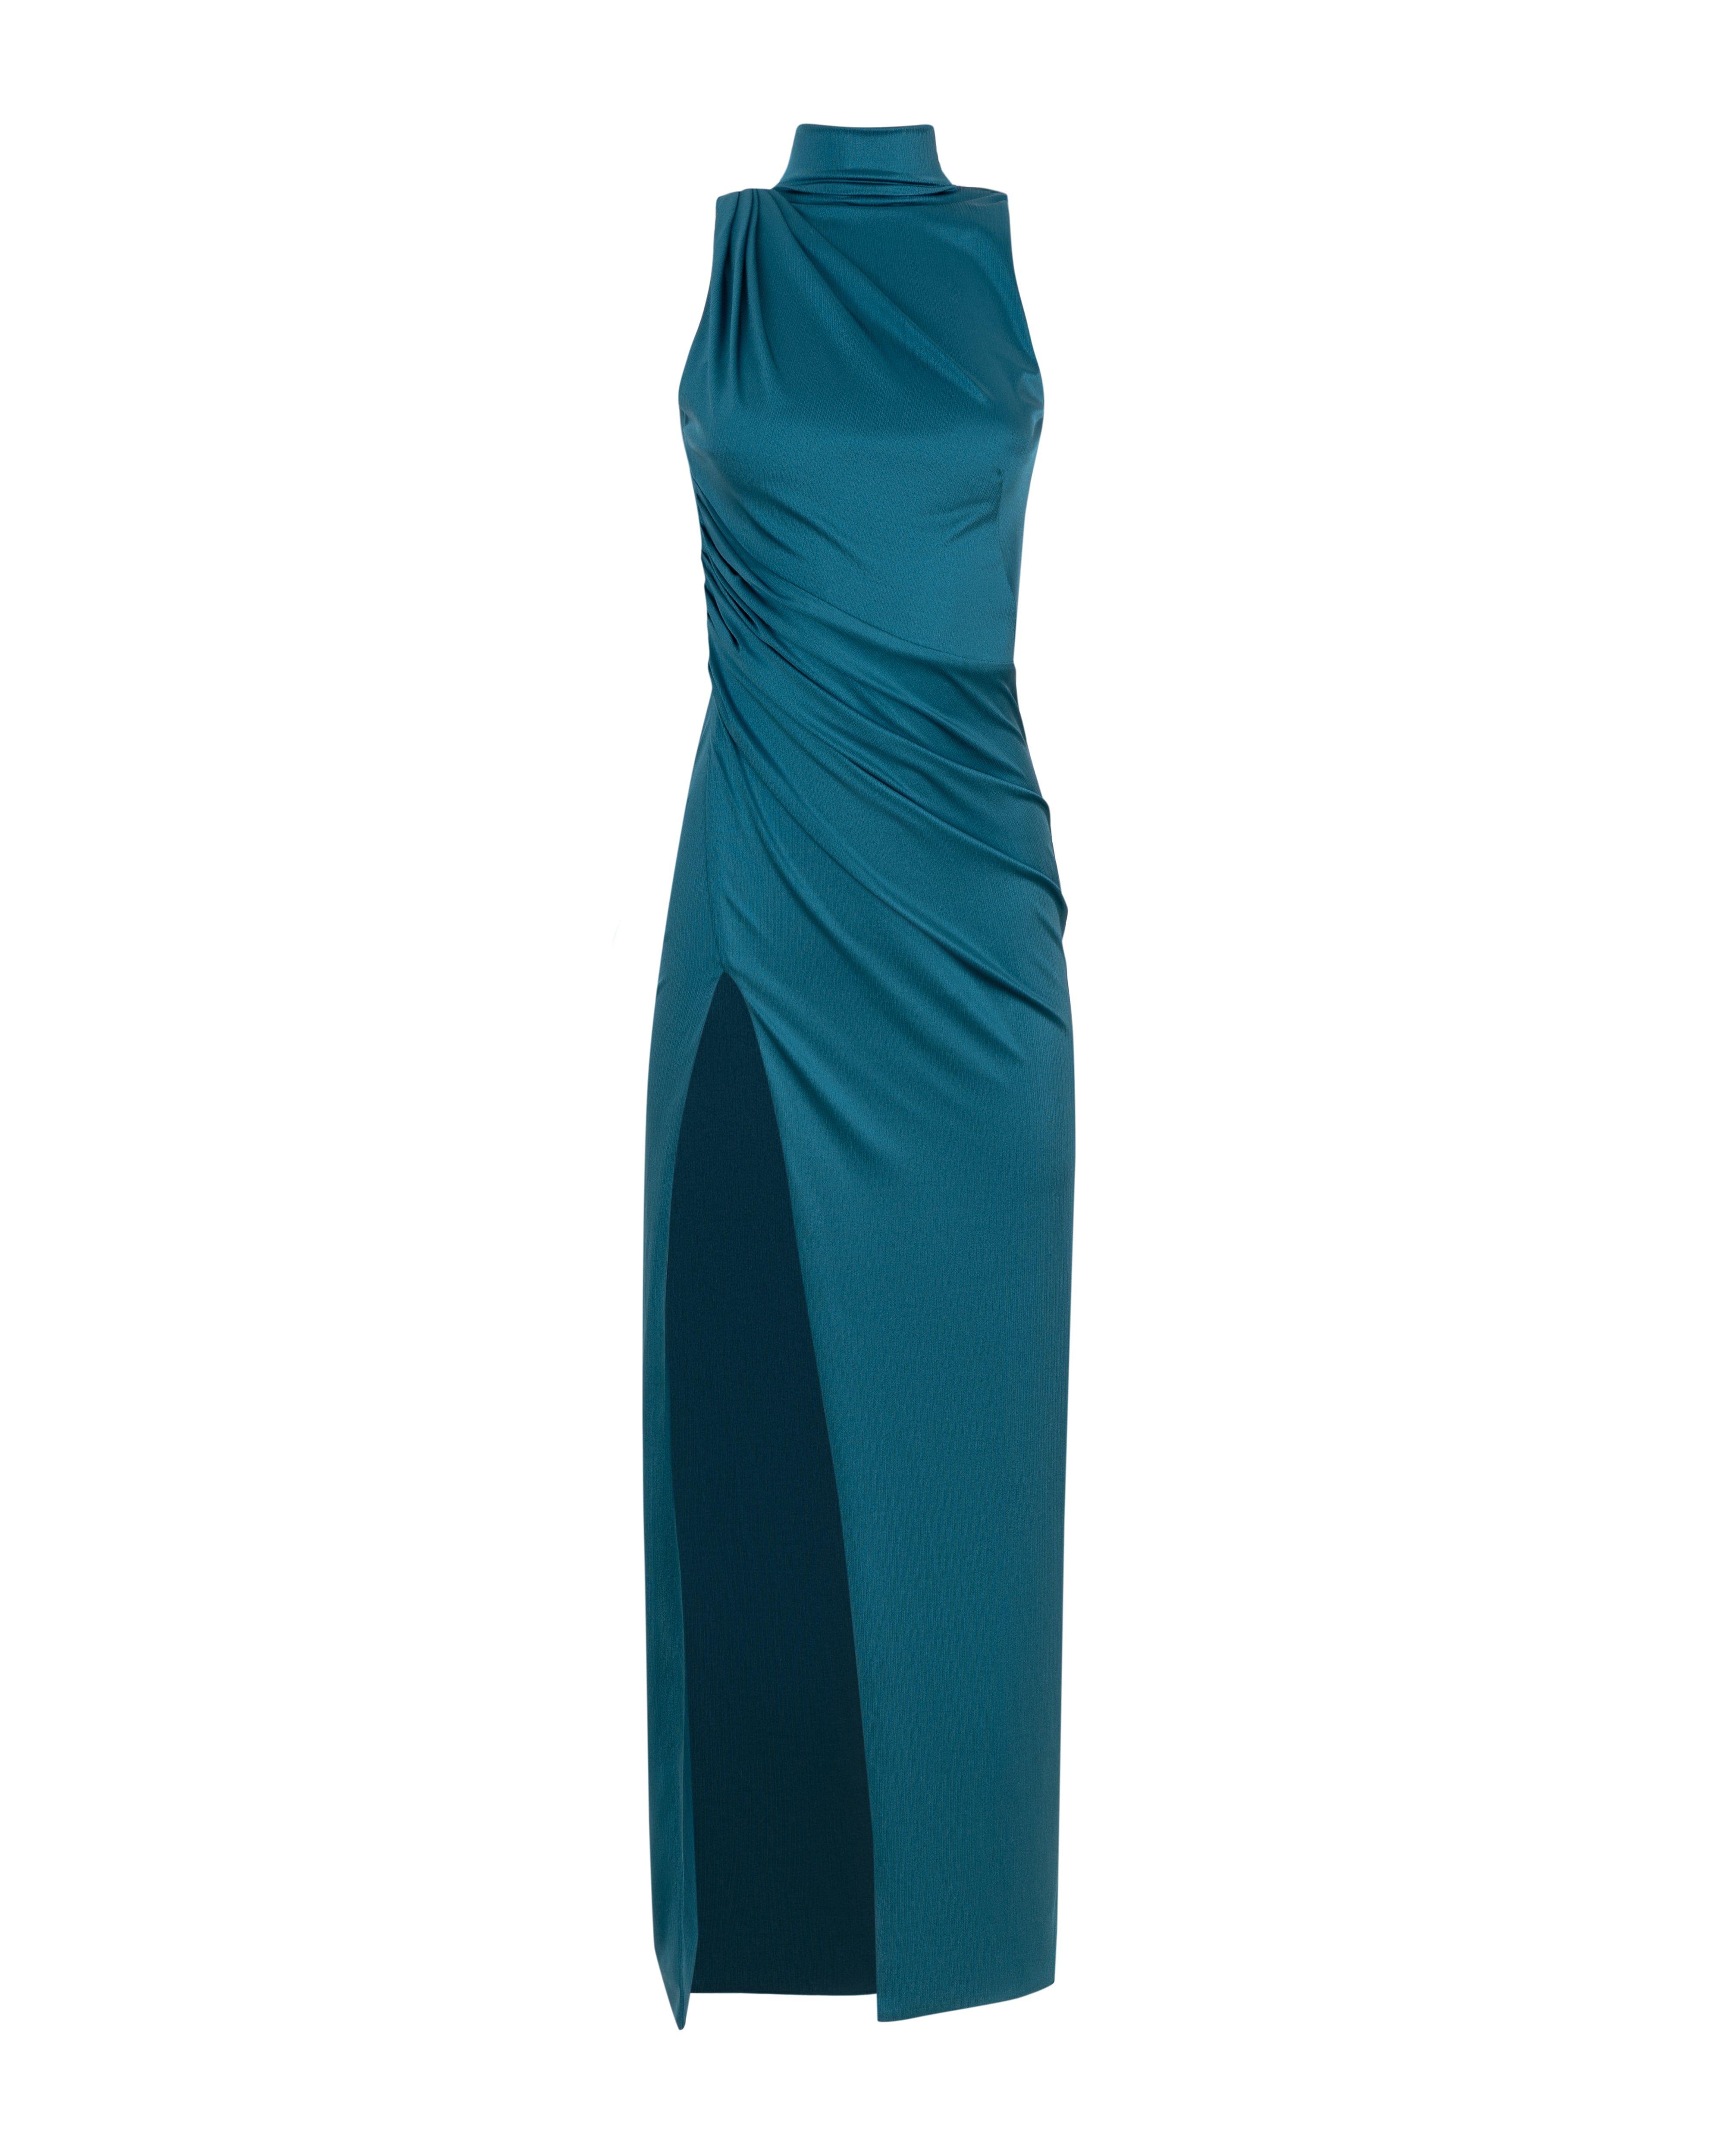 Viba Gown in Aquamarine Marmalade Sequin – Elizabeth Anthony